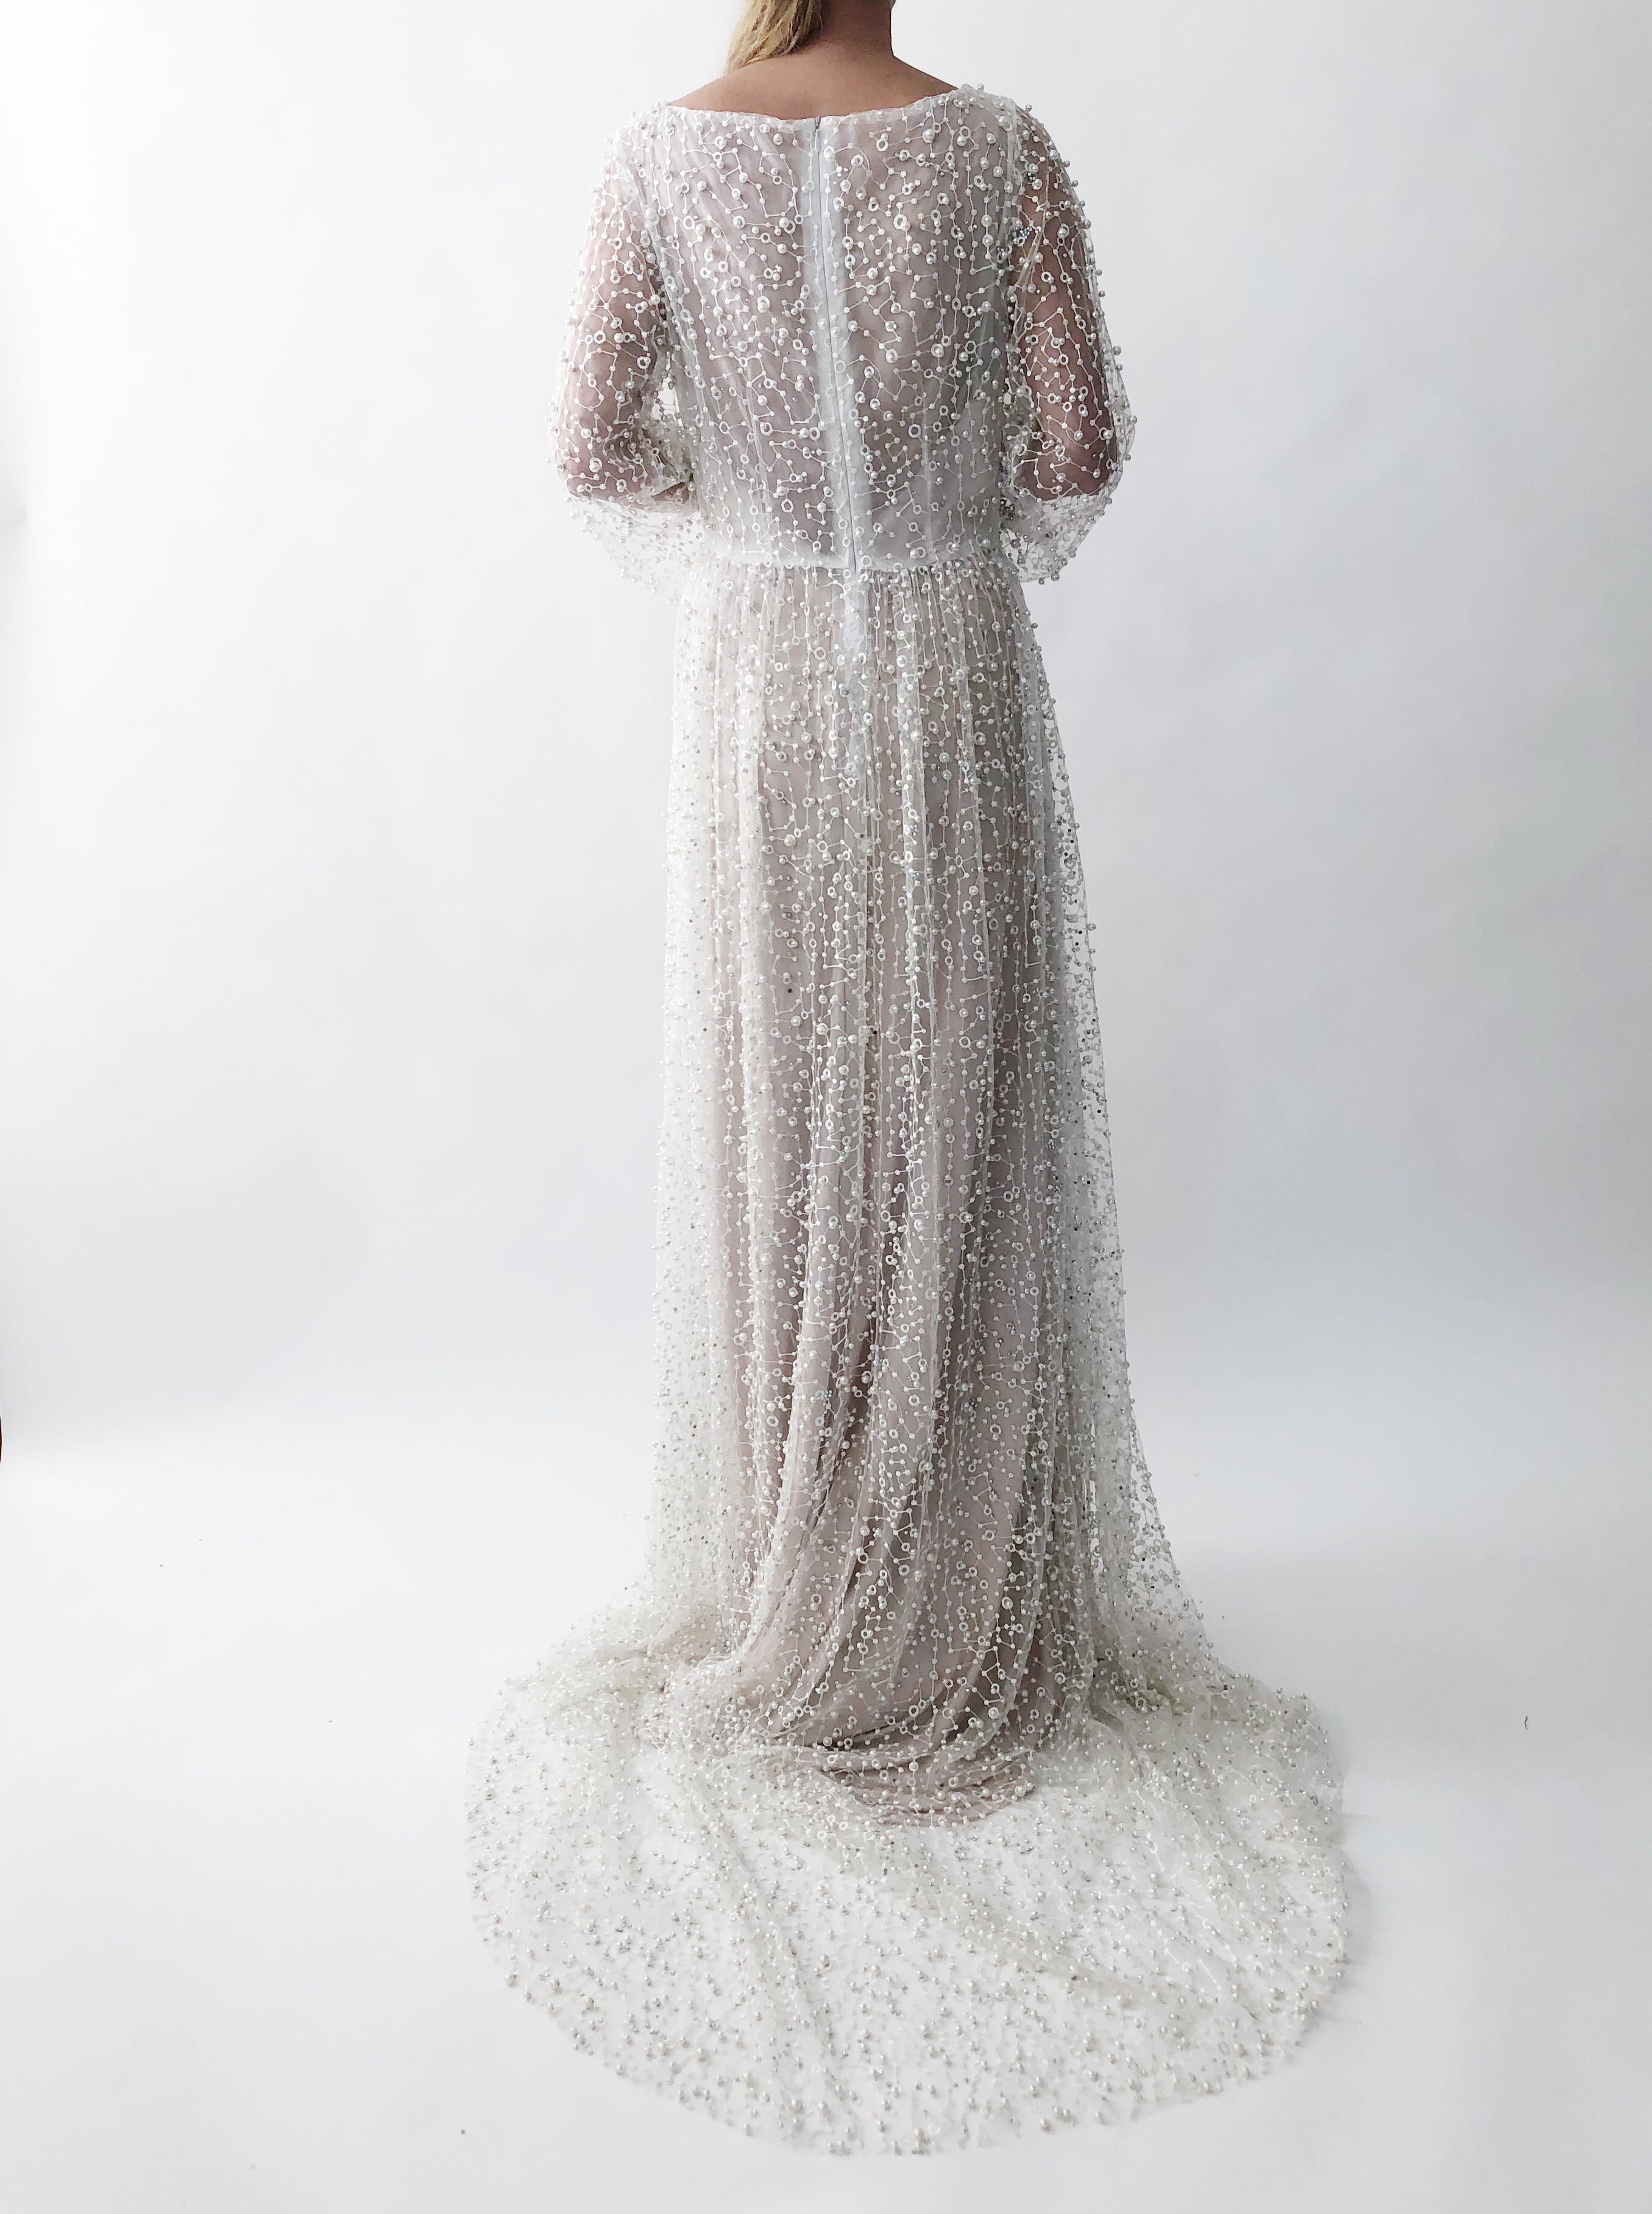 GOSSAMER Ivory Pearl Dress